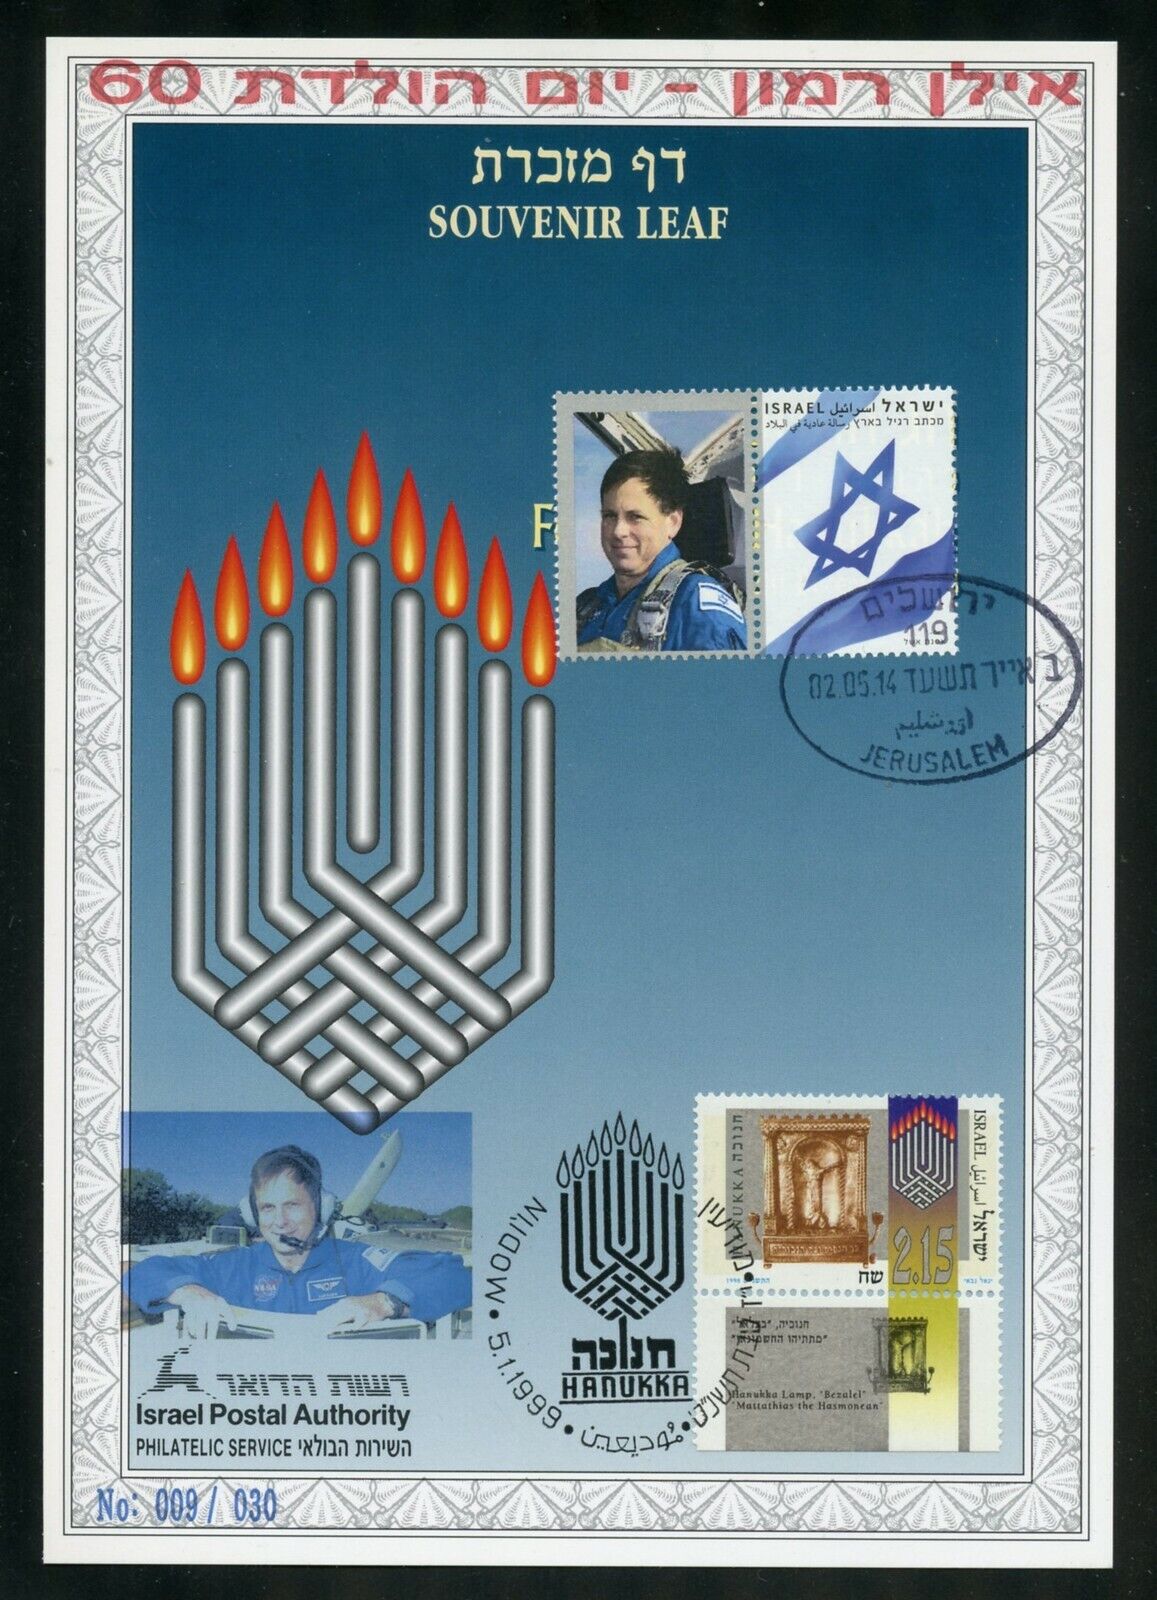 ISRAEL 60th BIRTHDAY HEBREW OVERPRINT ON '99 HANUKKAH SOUVENIR LEAF FD CANCELED